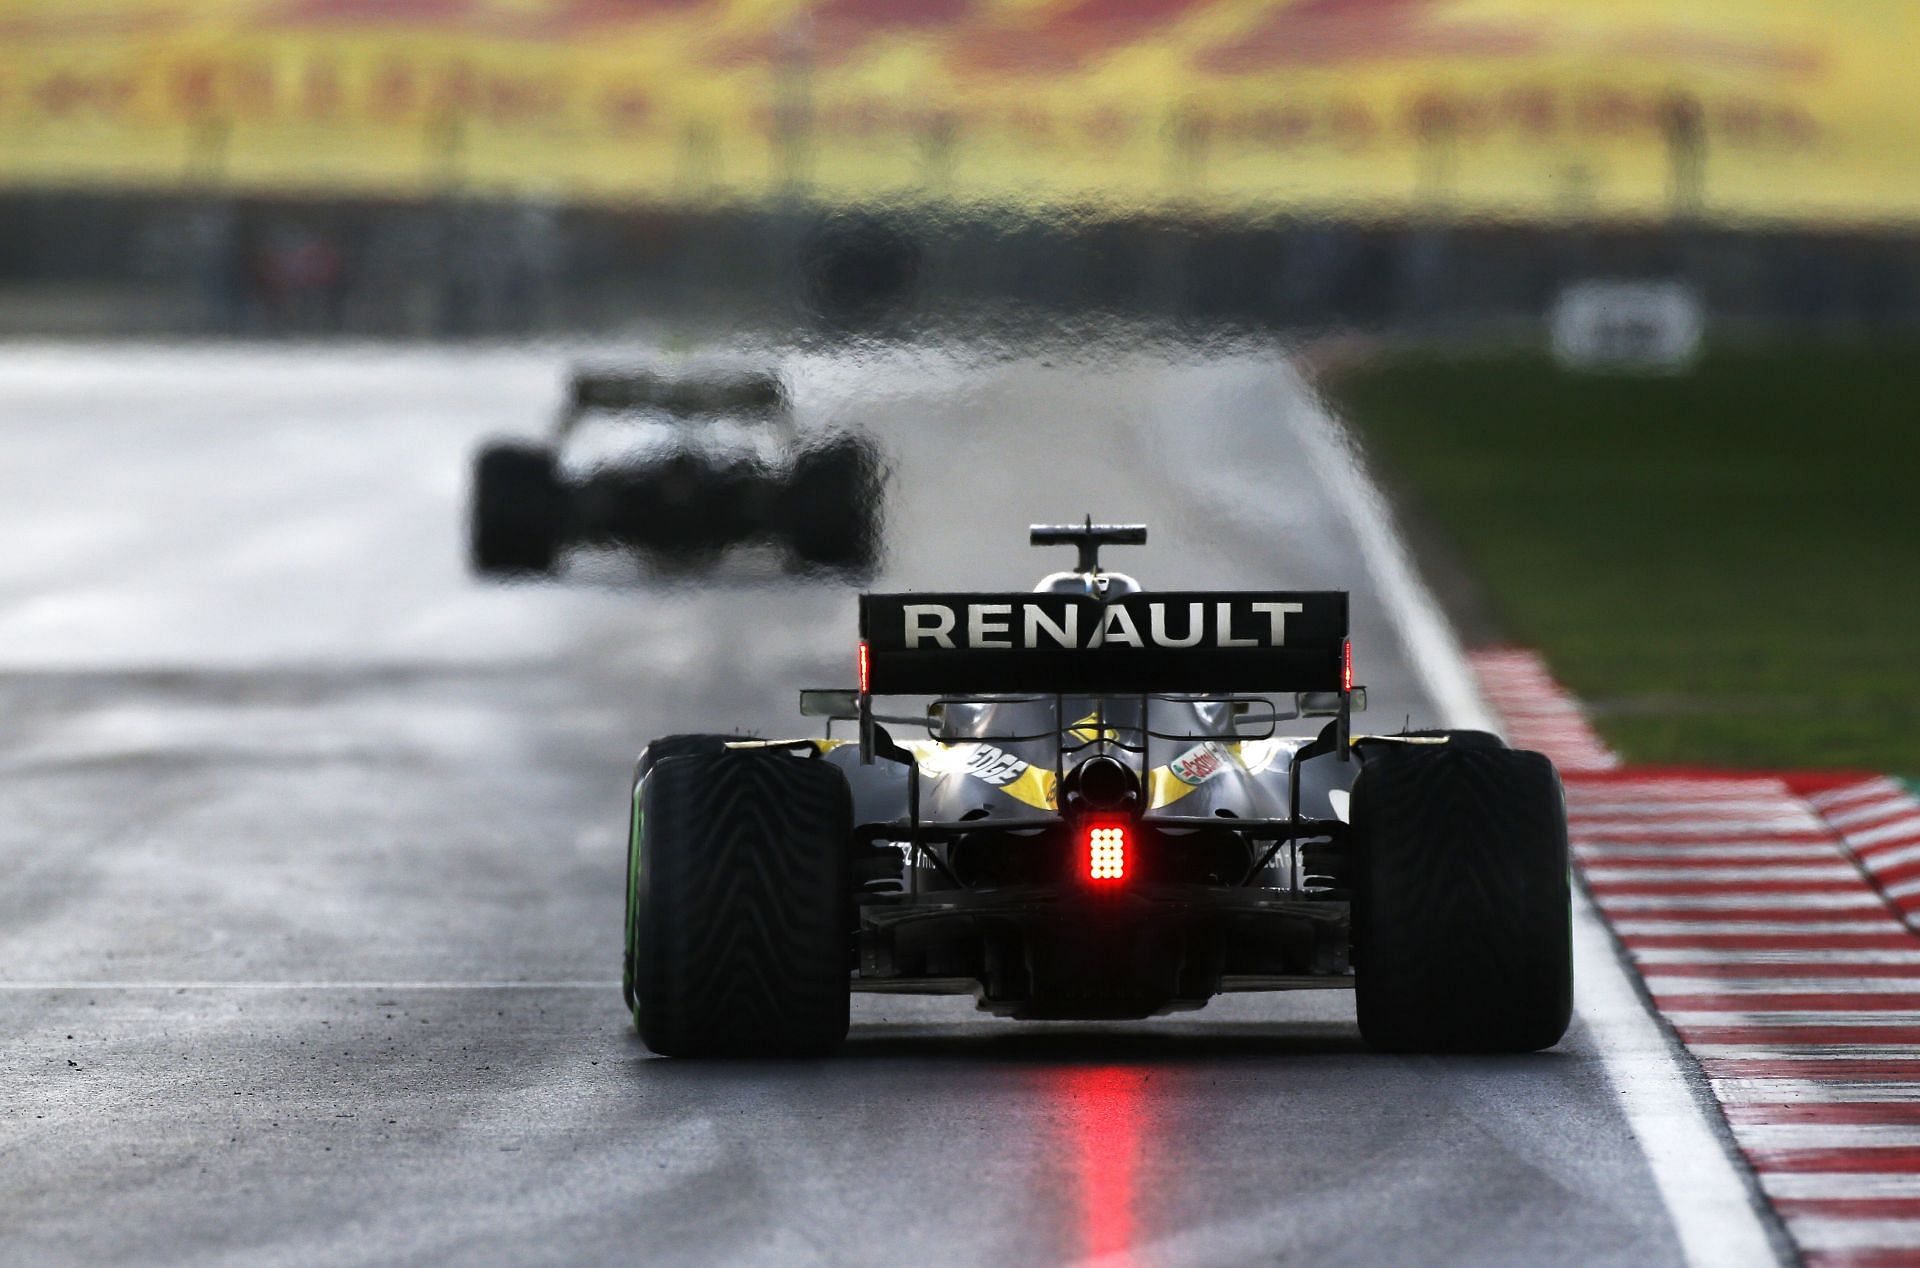 Daniel Ricciardo driving for Renault at the 2020 Turkish Grand Prix (Photo by Kenan Asyali - Pool/Getty Images)